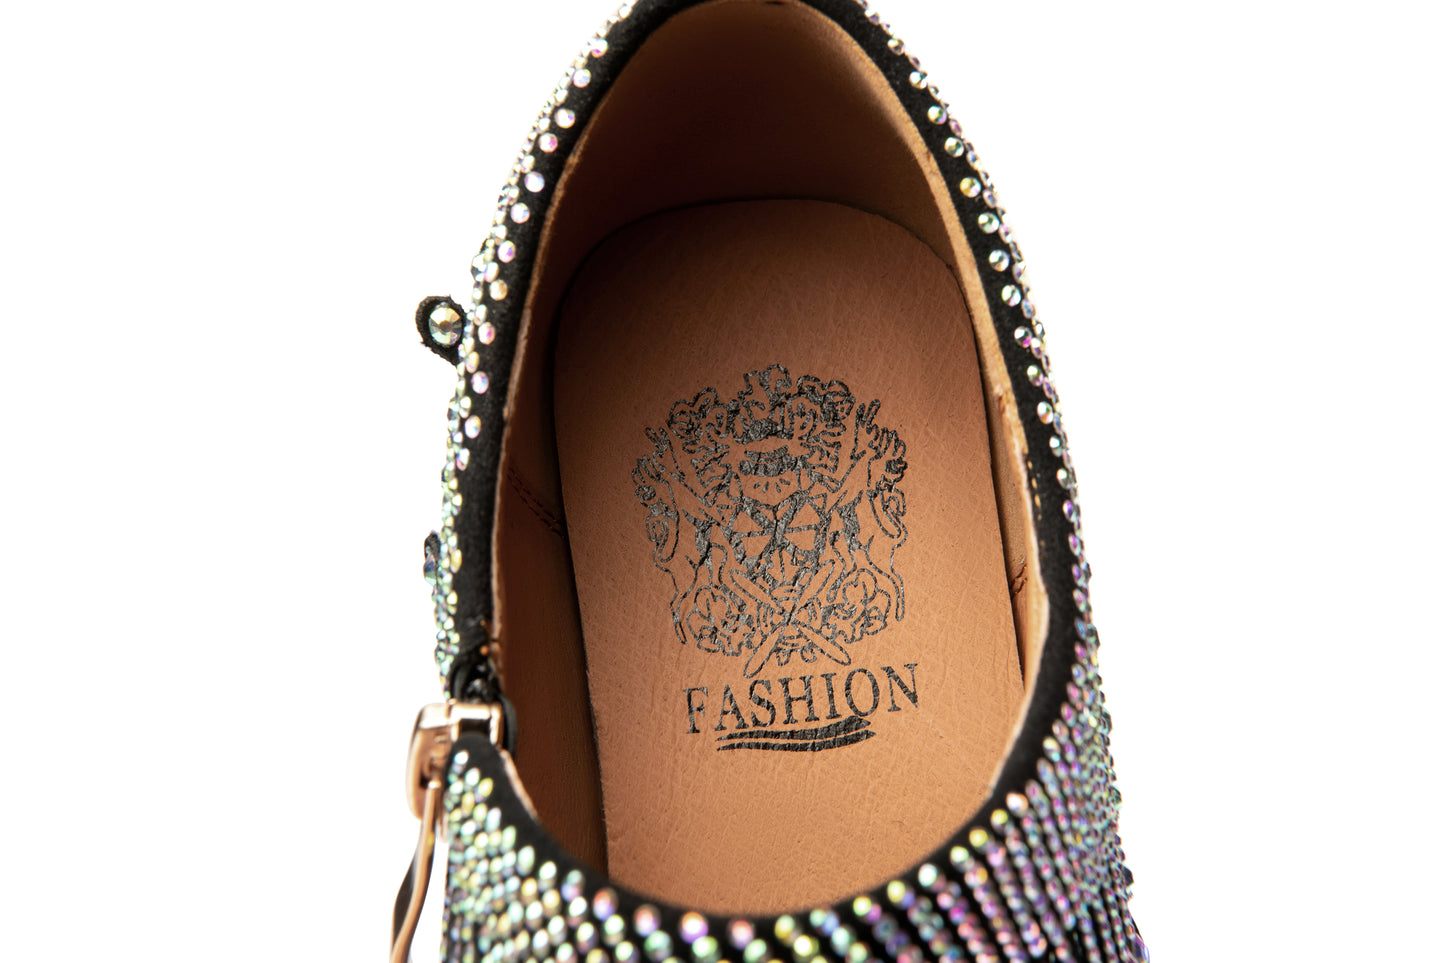 TinaCus Pointed Toe Women's Patent Leather Glitter Tassel Handmade Spool Heel Side Zip Pumps